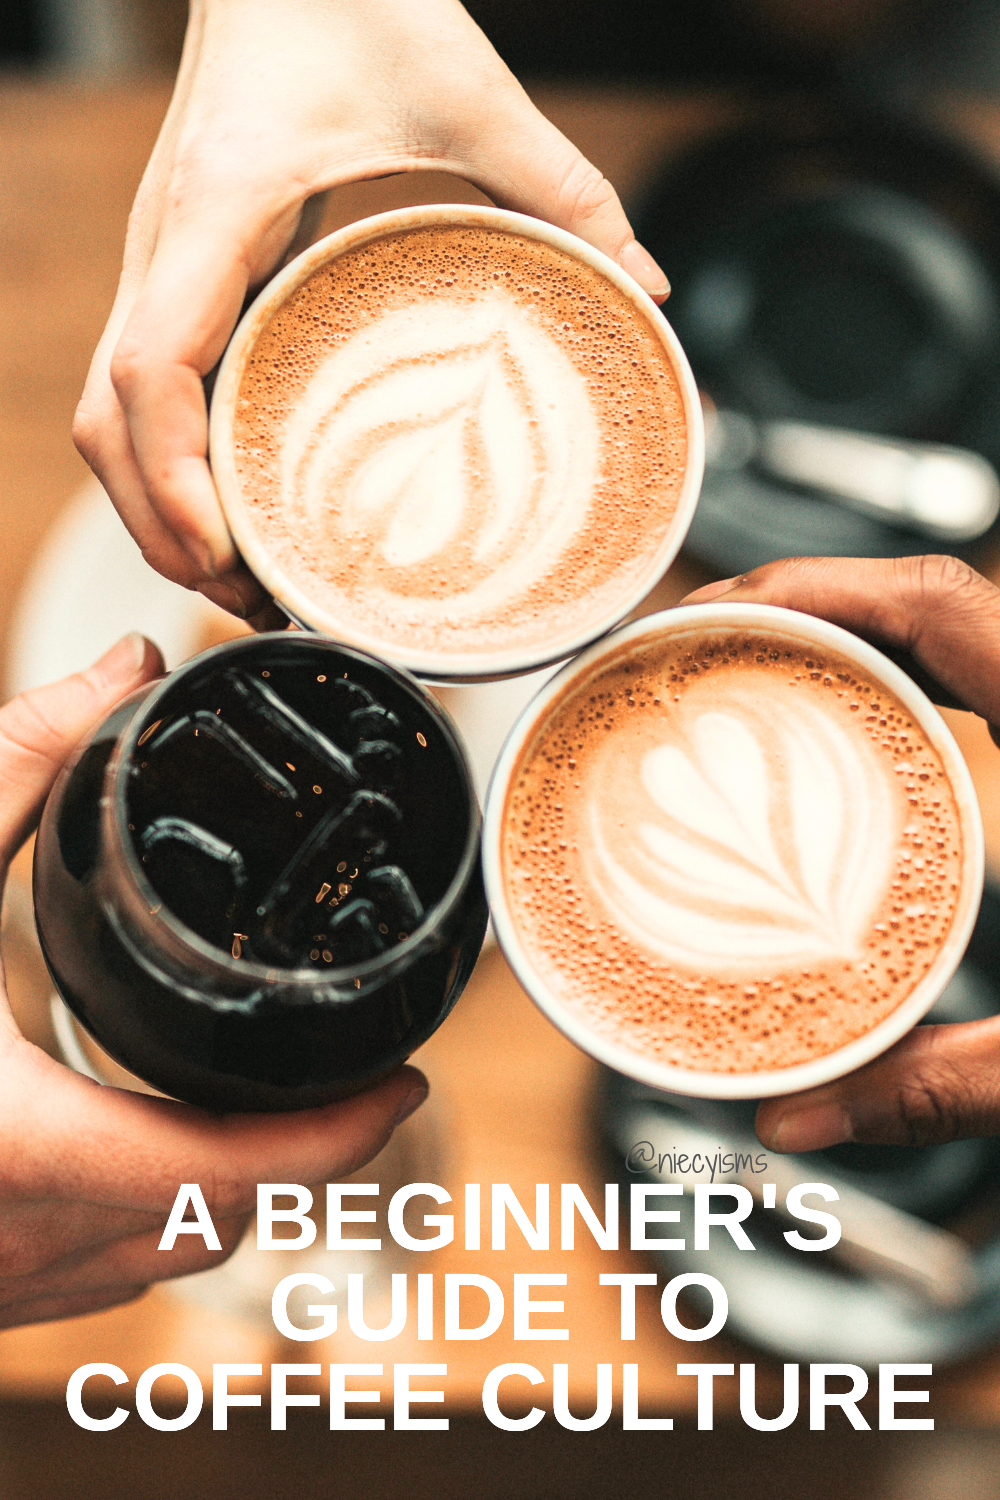 How To Do Latte Art - A Beginner's Guide